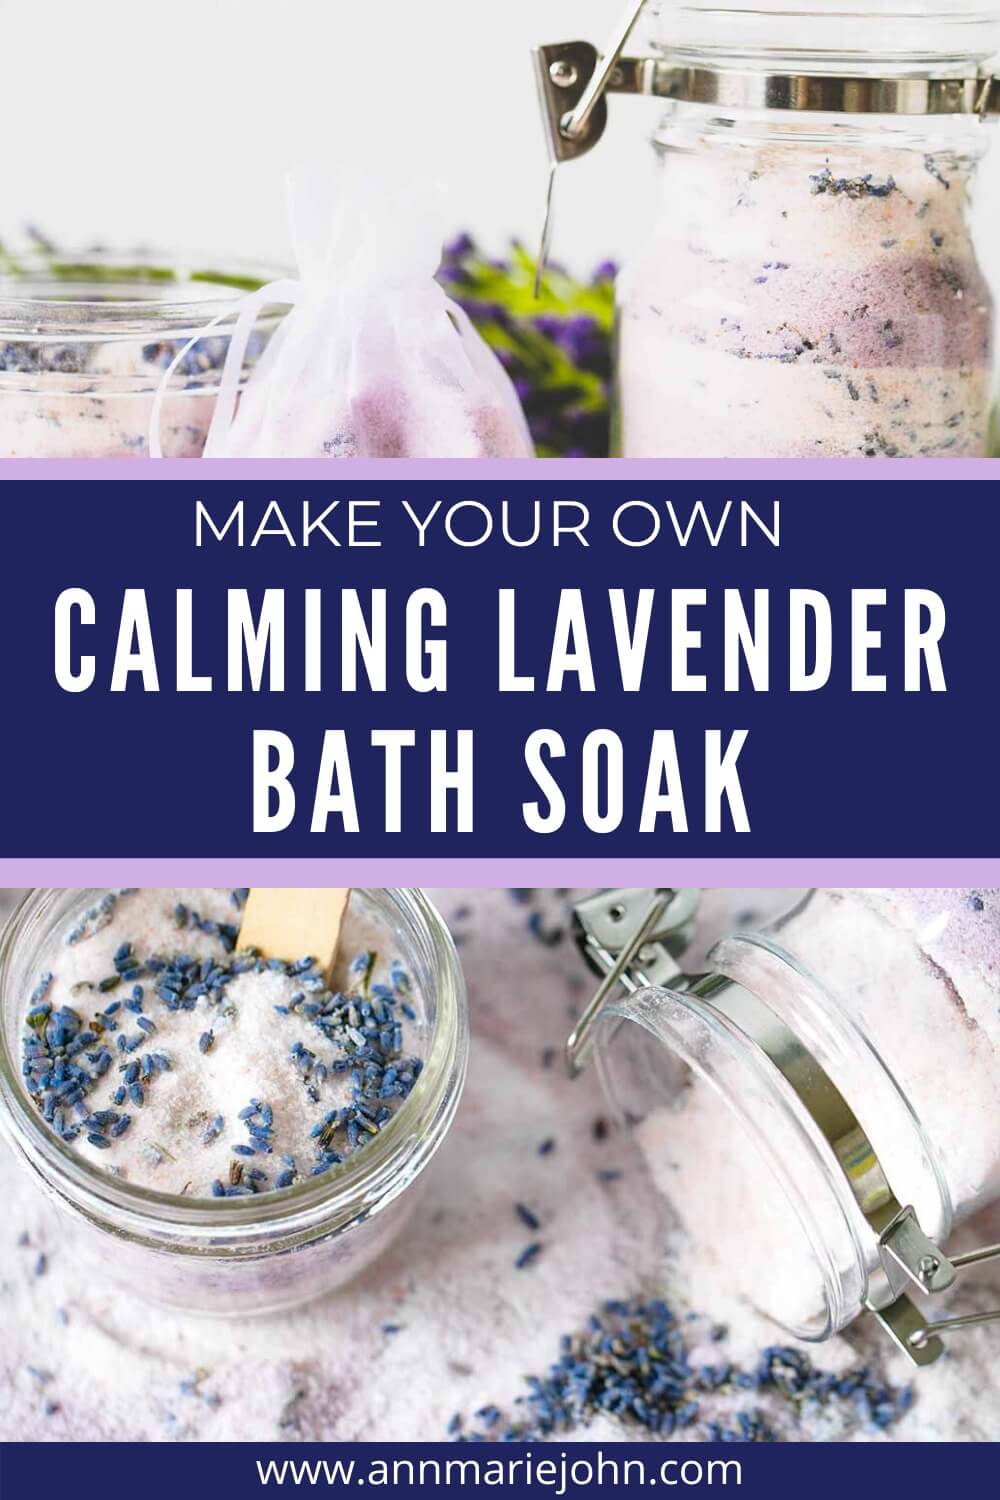 Make Your Own Calming Lavender Bath Soak